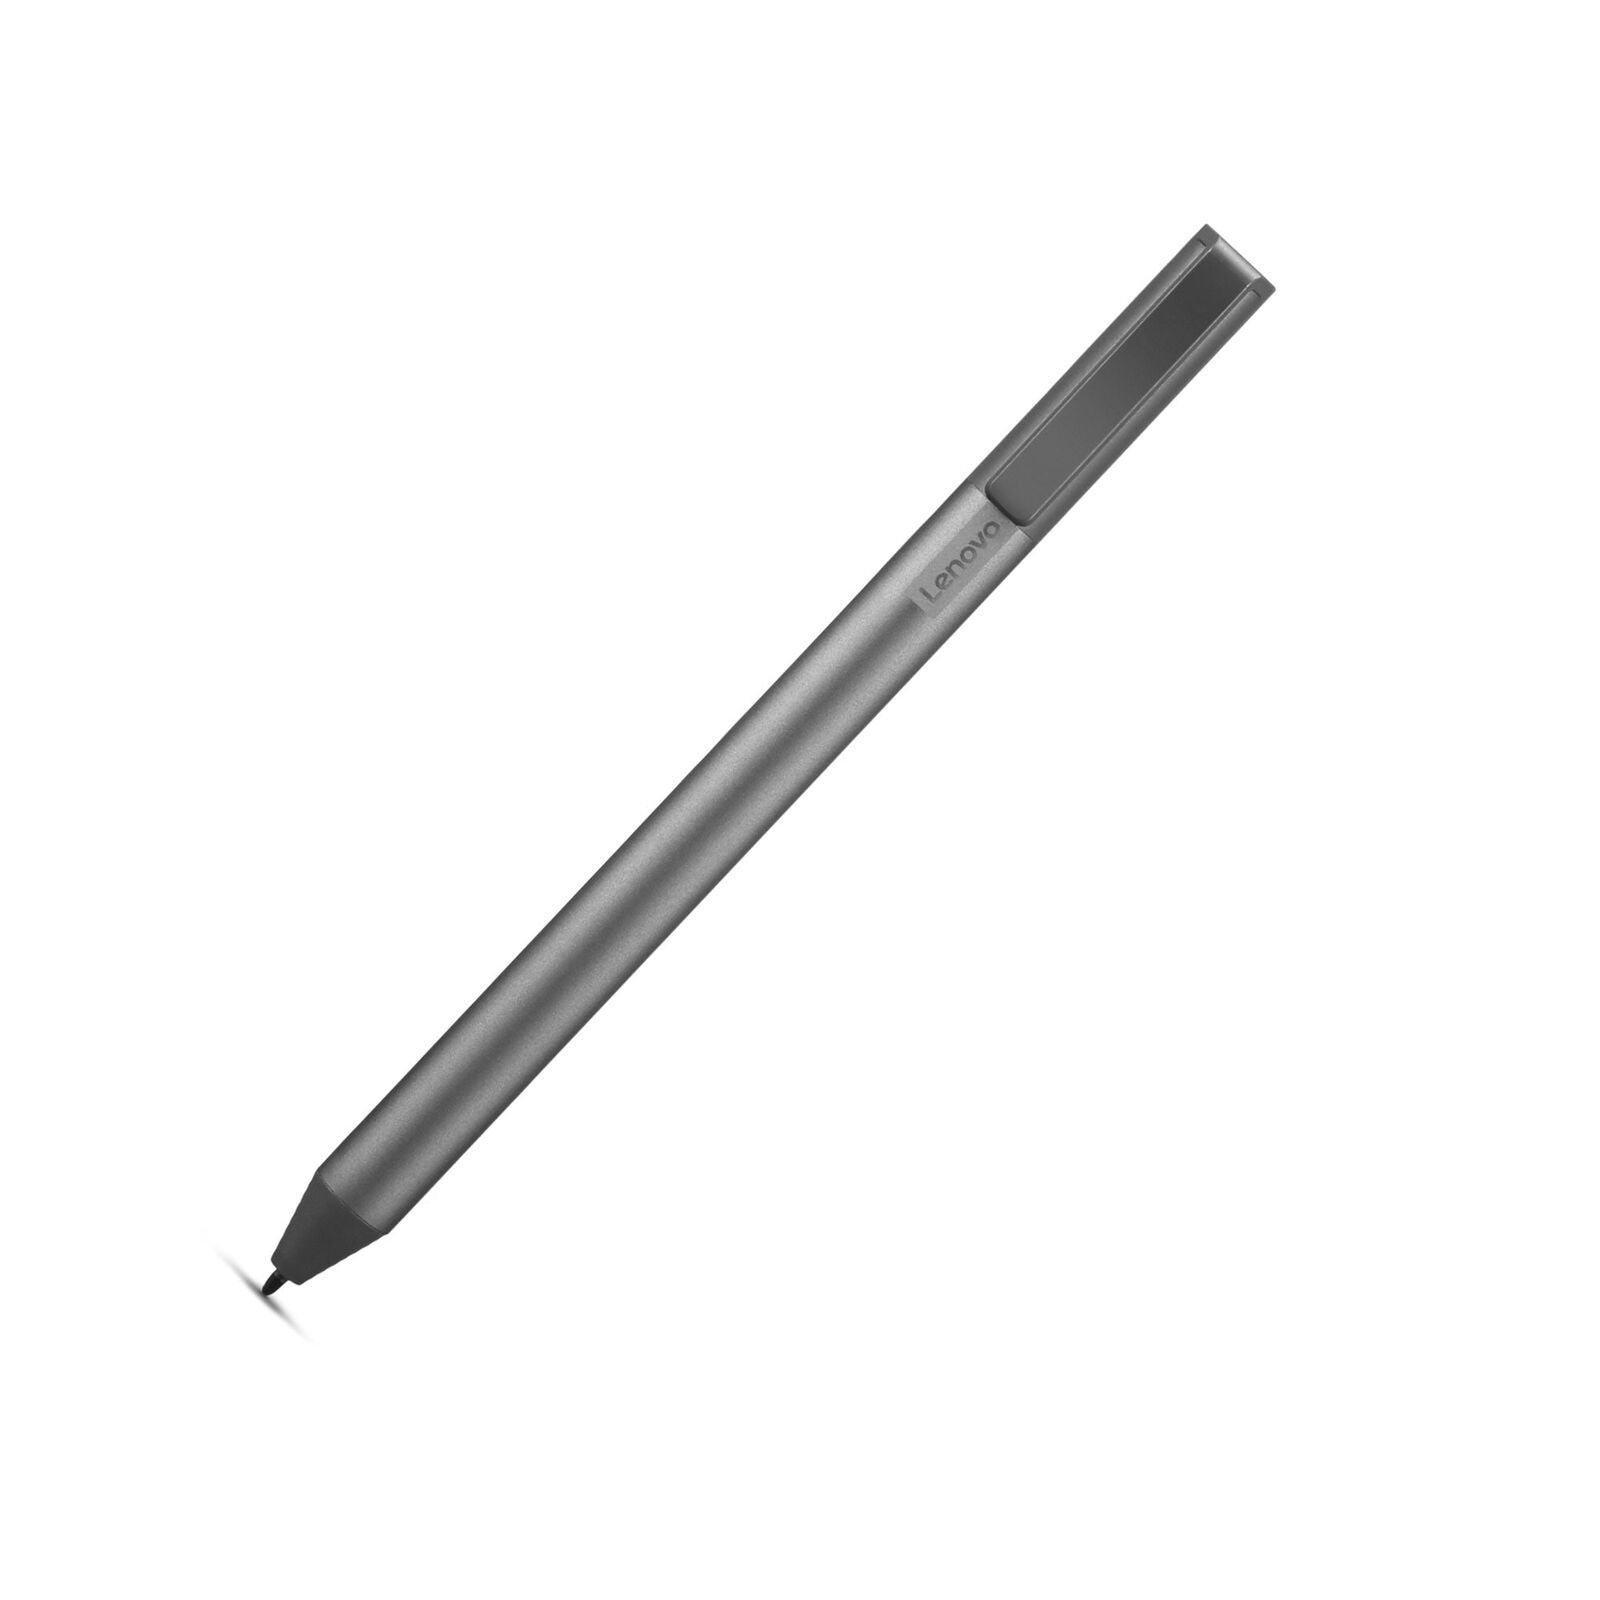 Lenovo Usi Pen For Select Yoga, Ideapad Laptops - $60.99